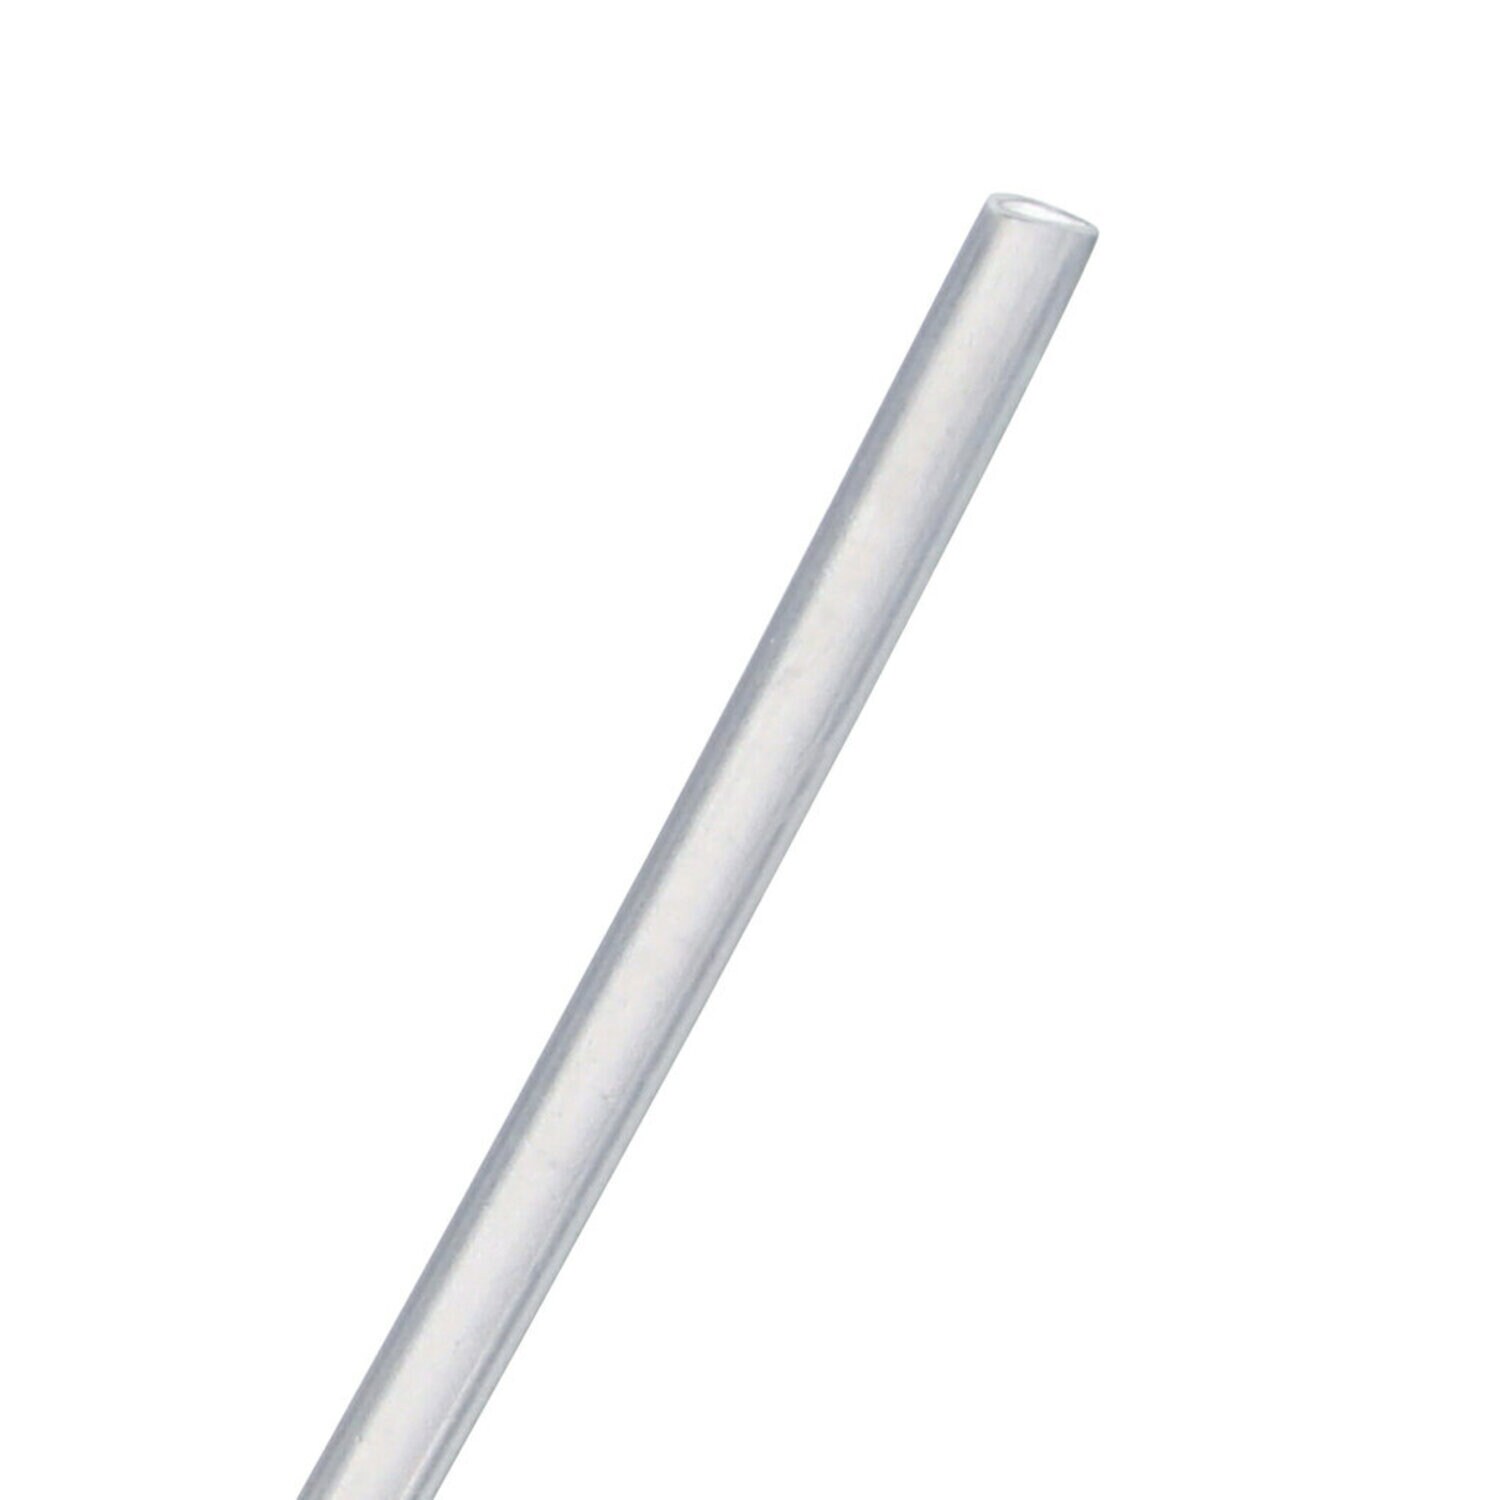 7100020132 - 3M Heat Shrink Thin-Wall Tubing FP-301-3/32-Clear-500`: 500 ft spool
length, 1500 linear ft/box, 3 Rolls/Case